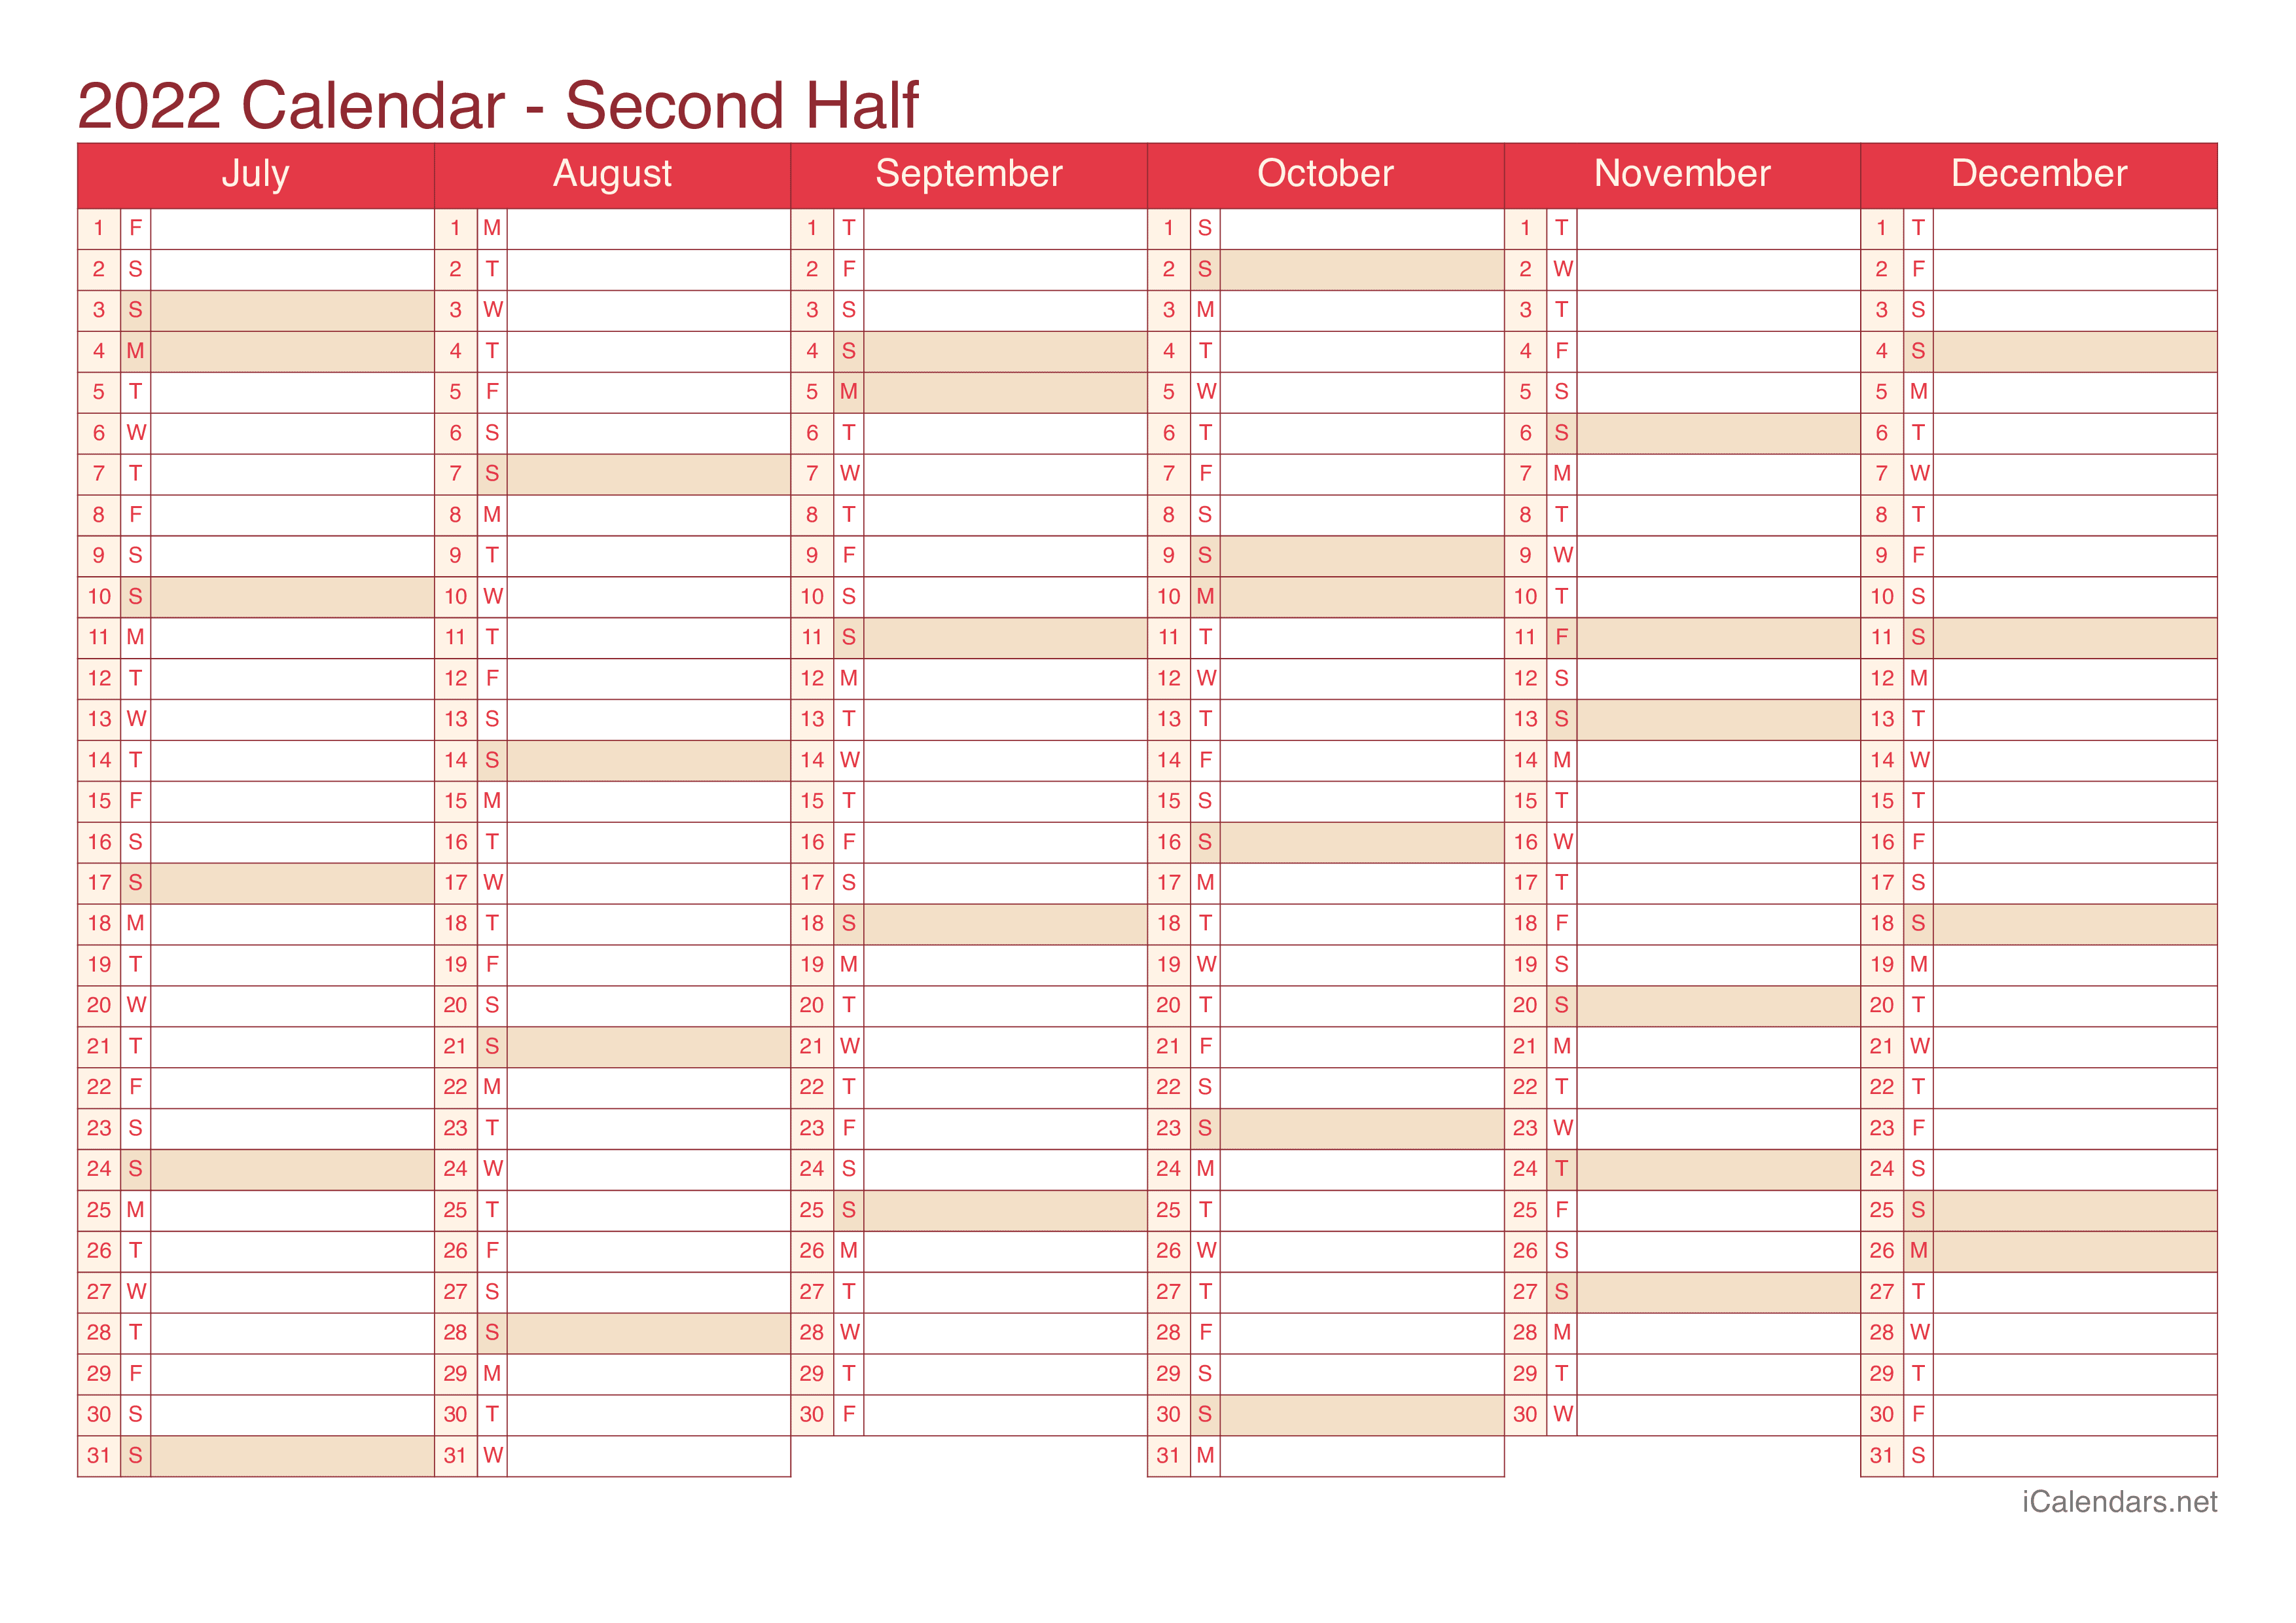 Half Page Calendar 2022 2022 Printable Calendar - Pdf Or Excel - Icalendars.net